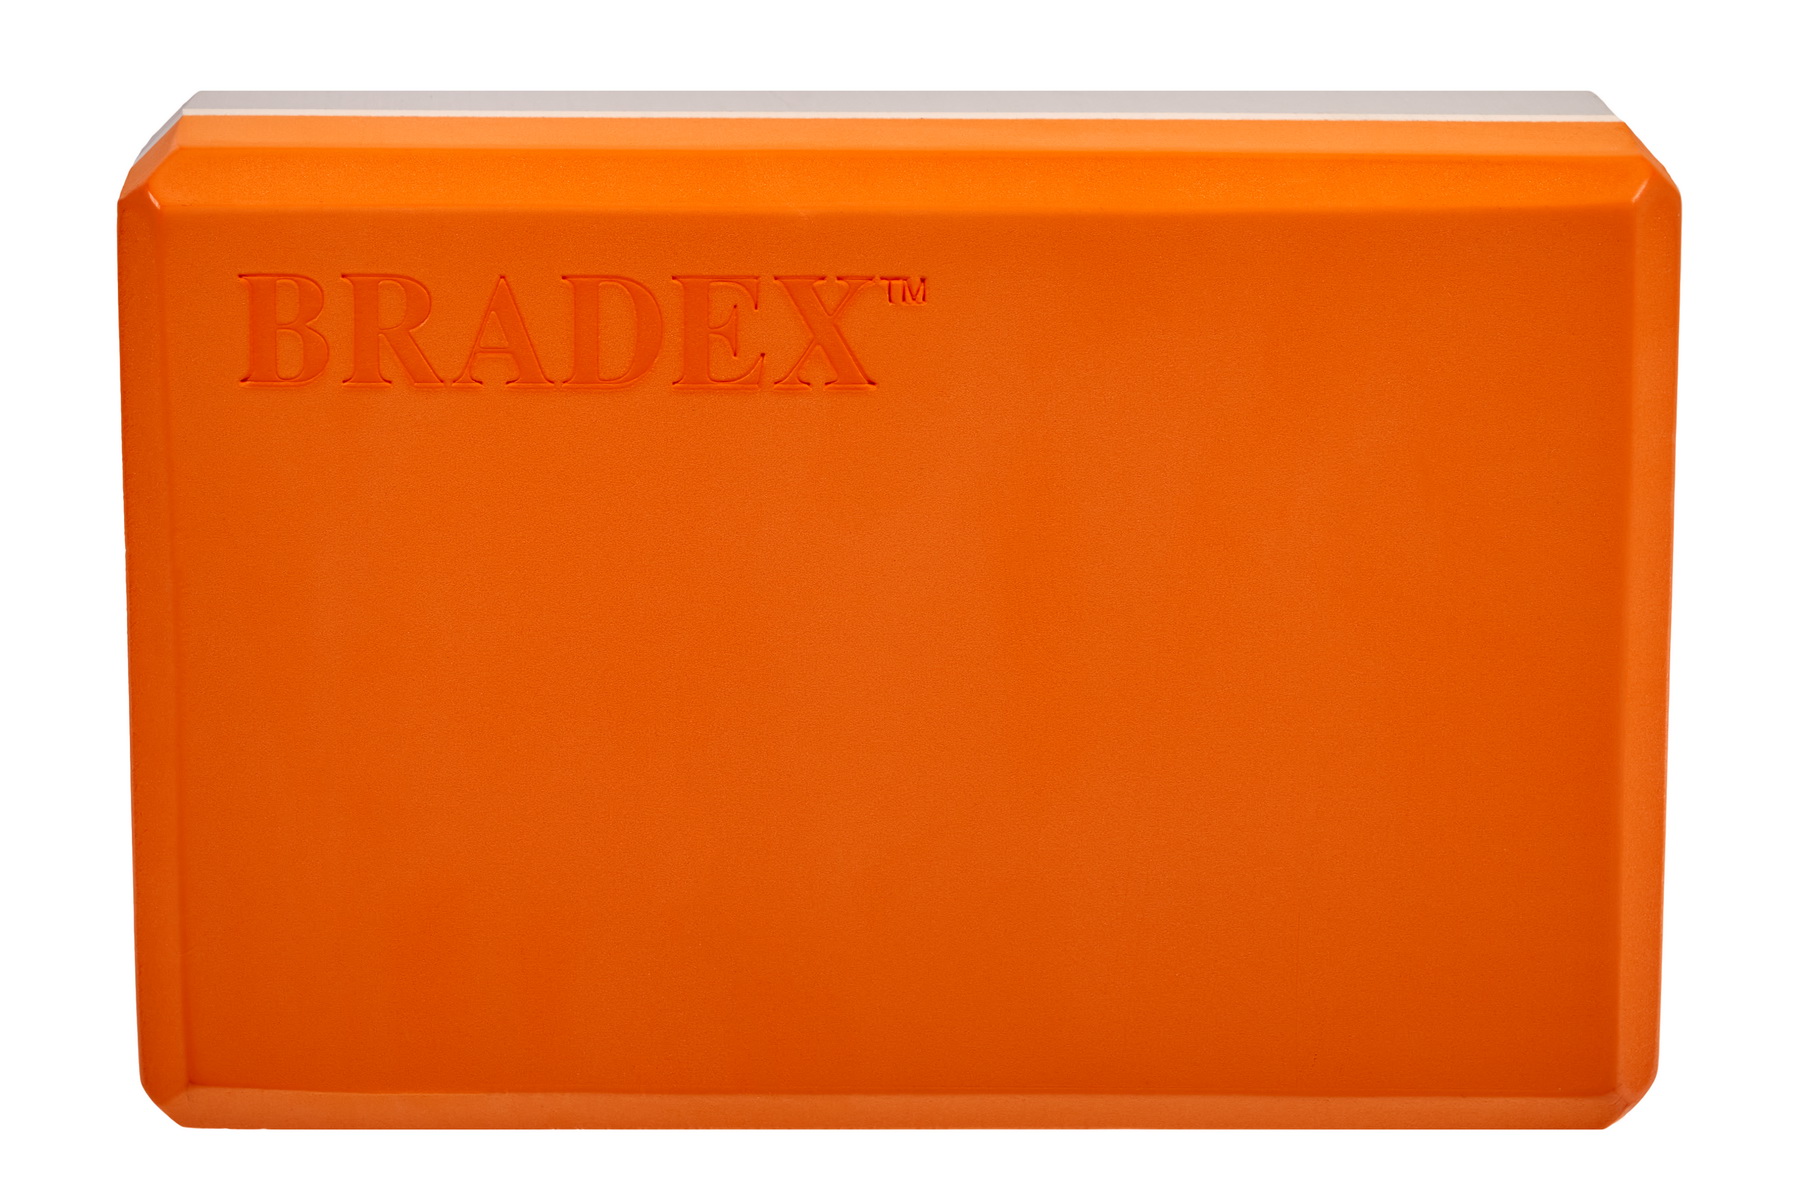    Bradex, Bradex (-, , SF 0731)